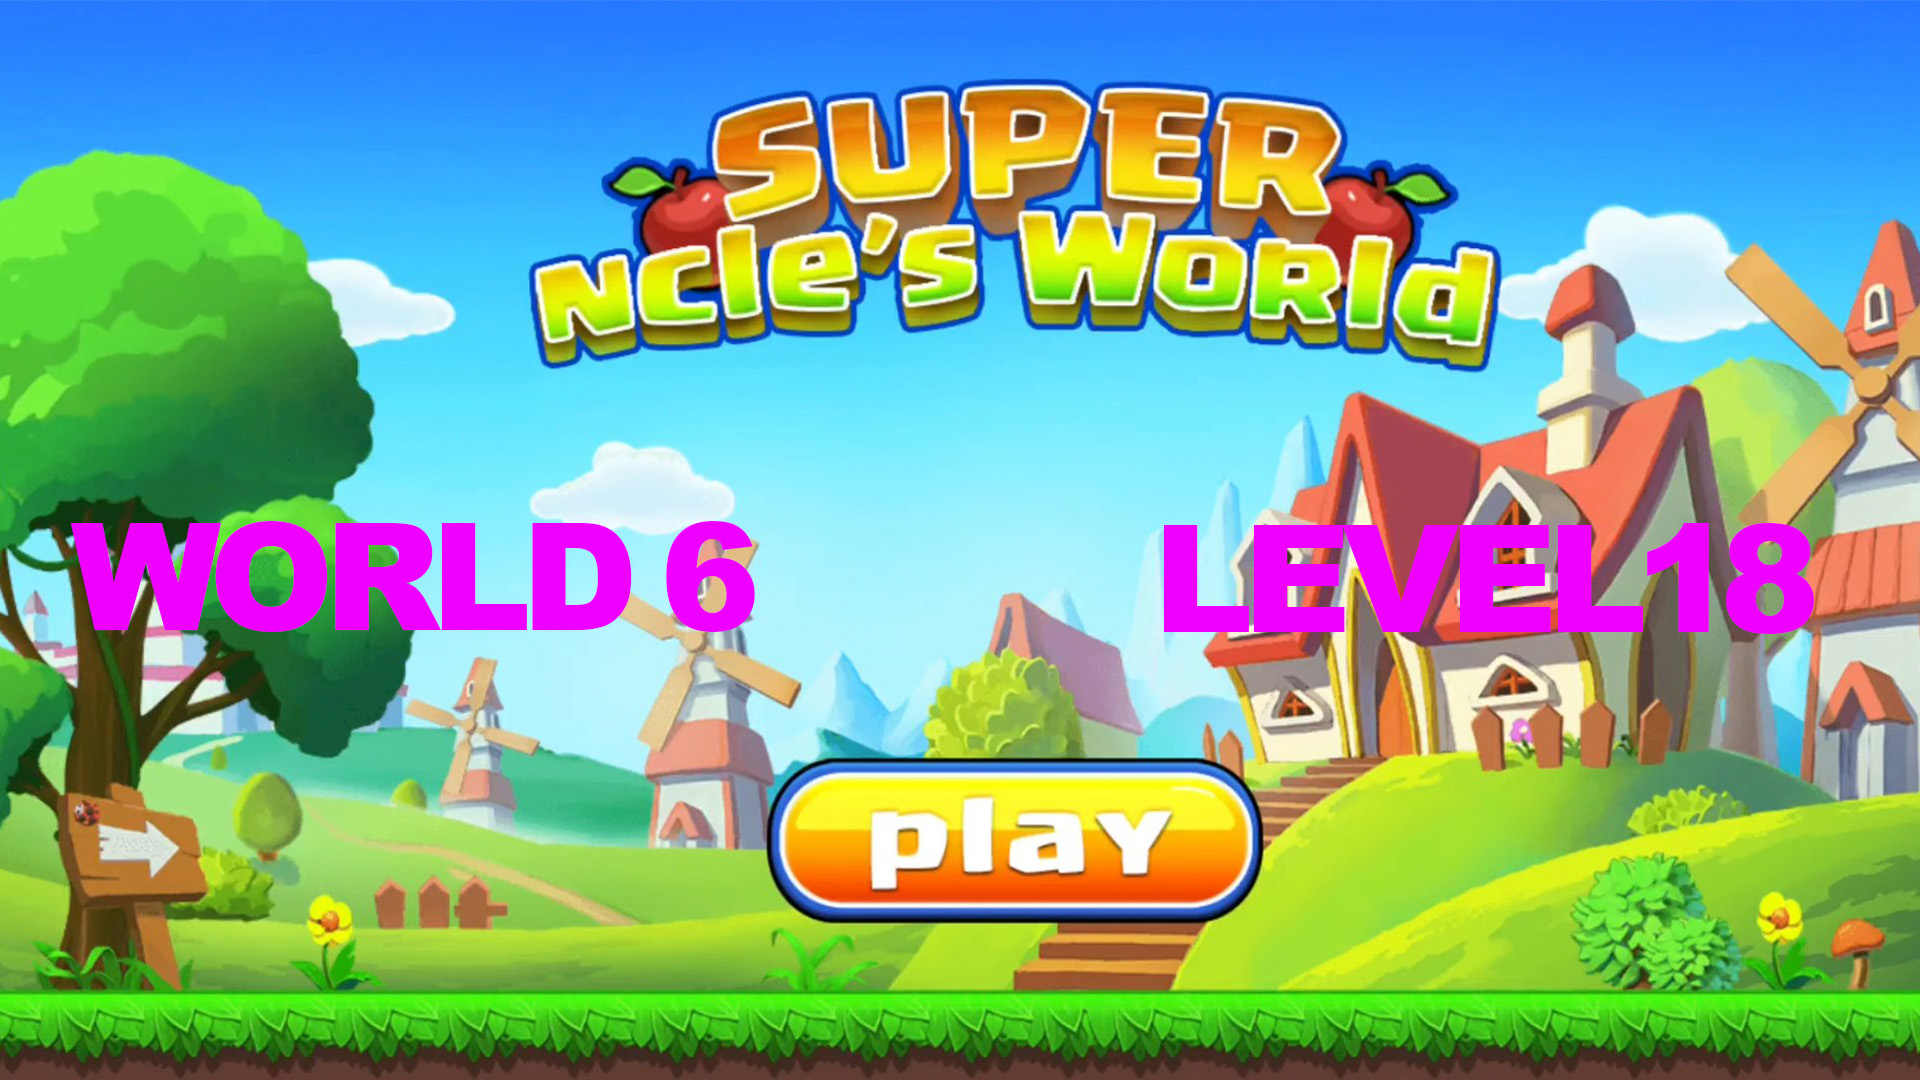 Super ncle's  World 6. Level 18.